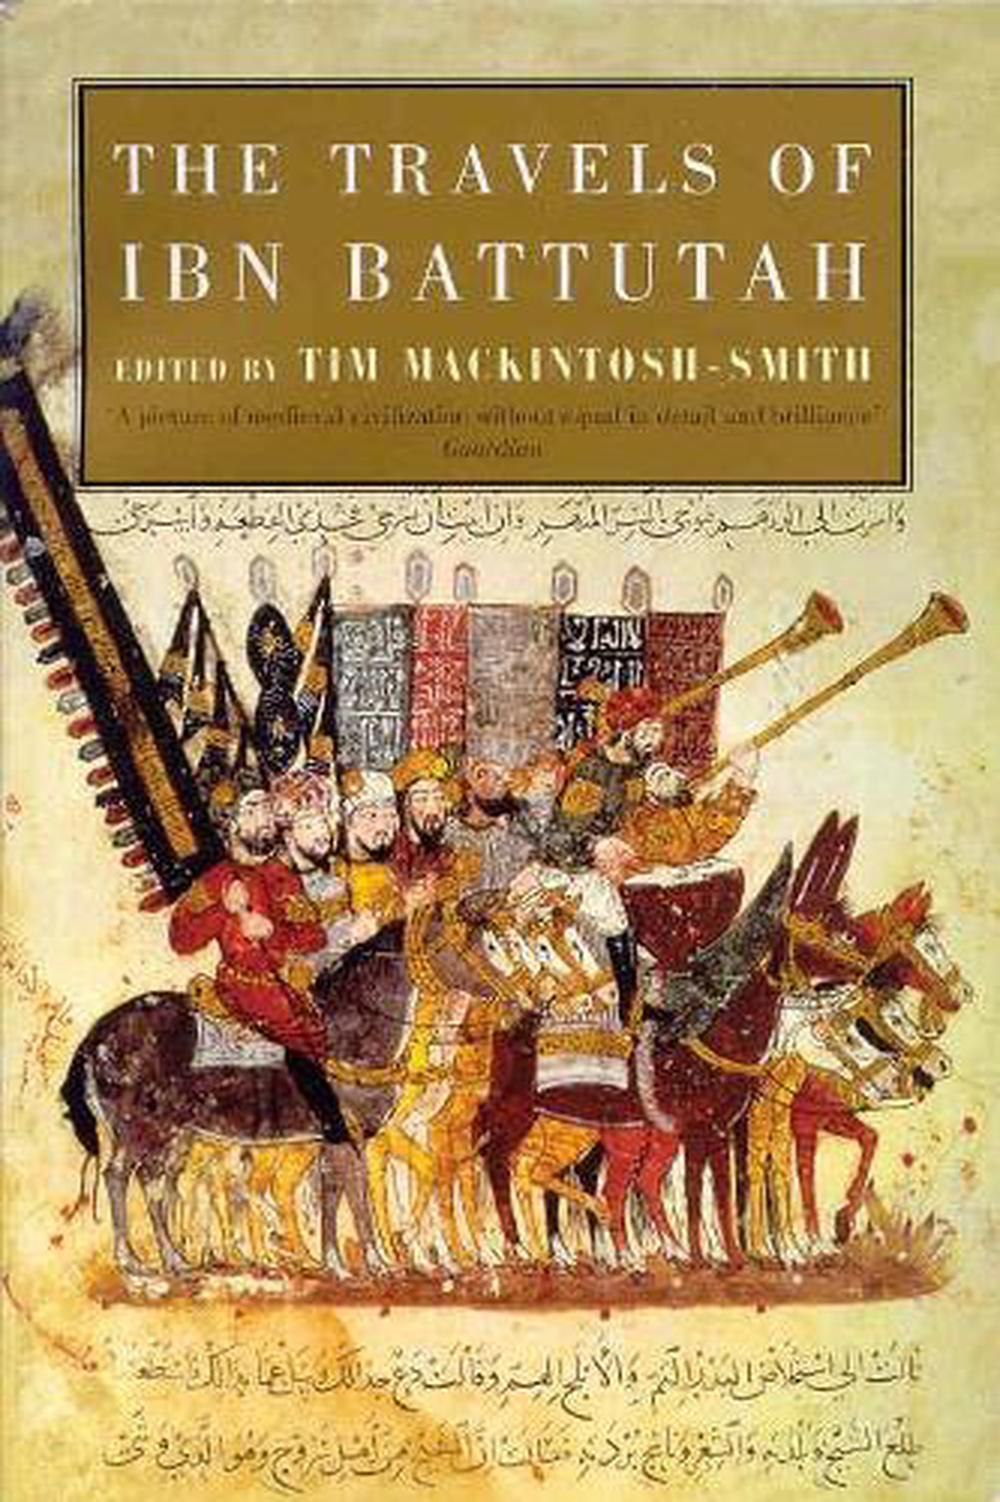 book of travels battata